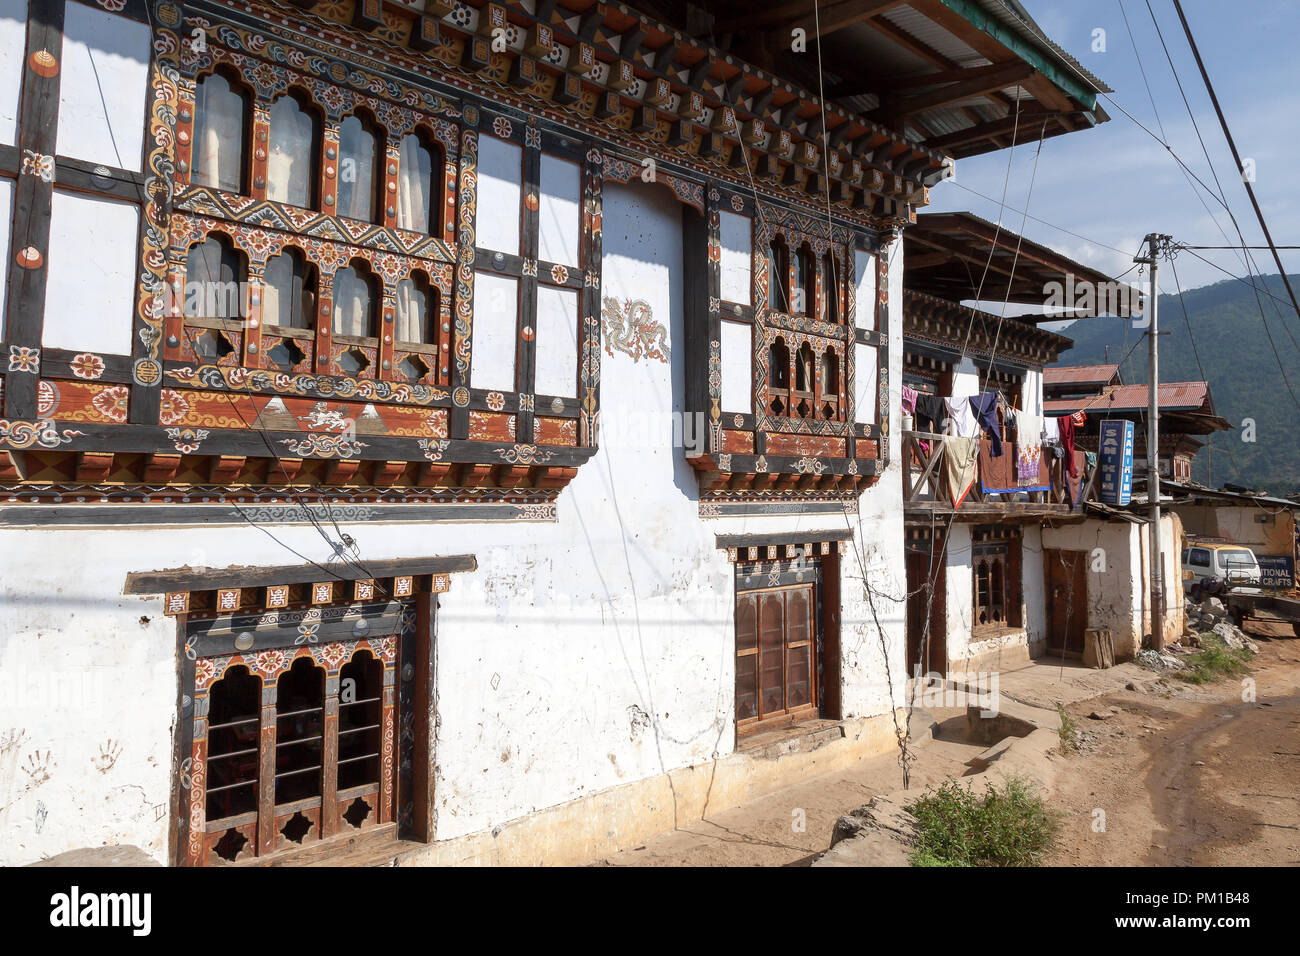 Traditional buildings in Pana Village, Bhutan Stock Photo